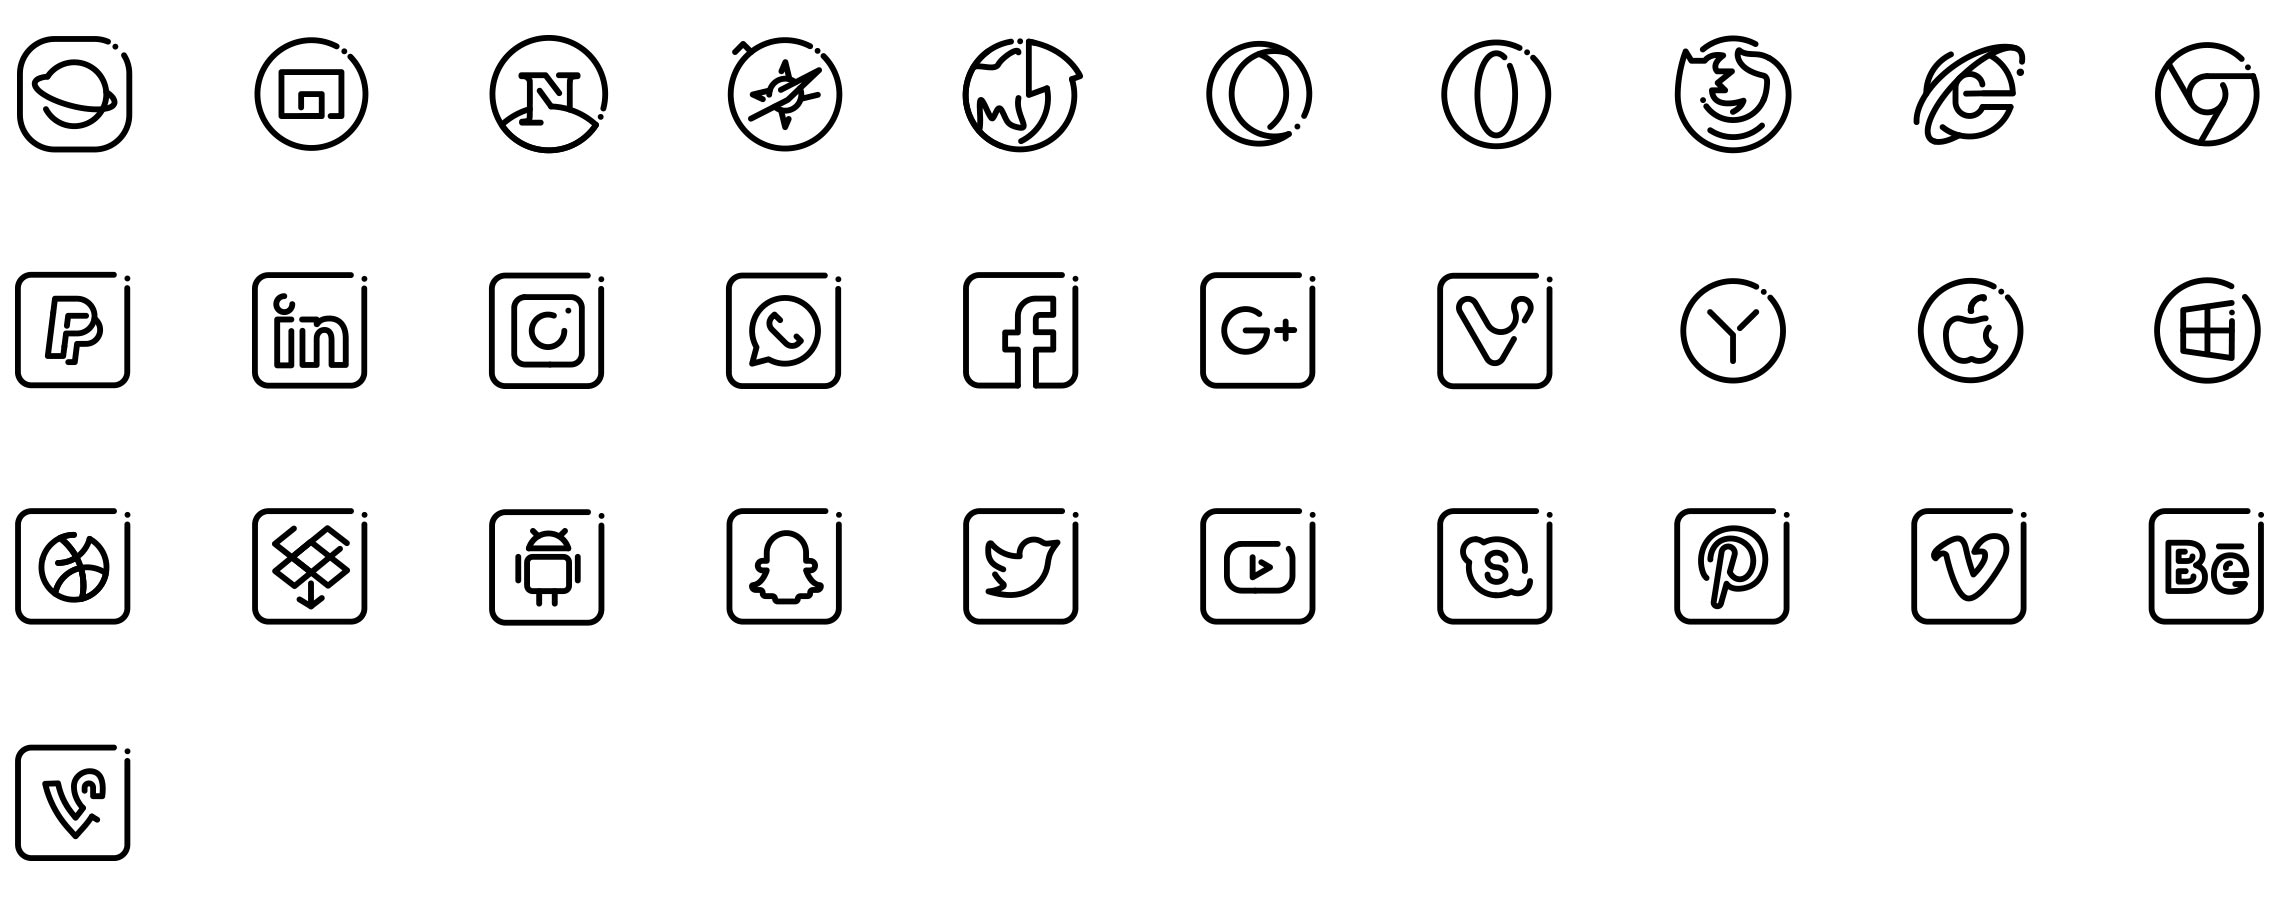 social-media-icons-set-preview